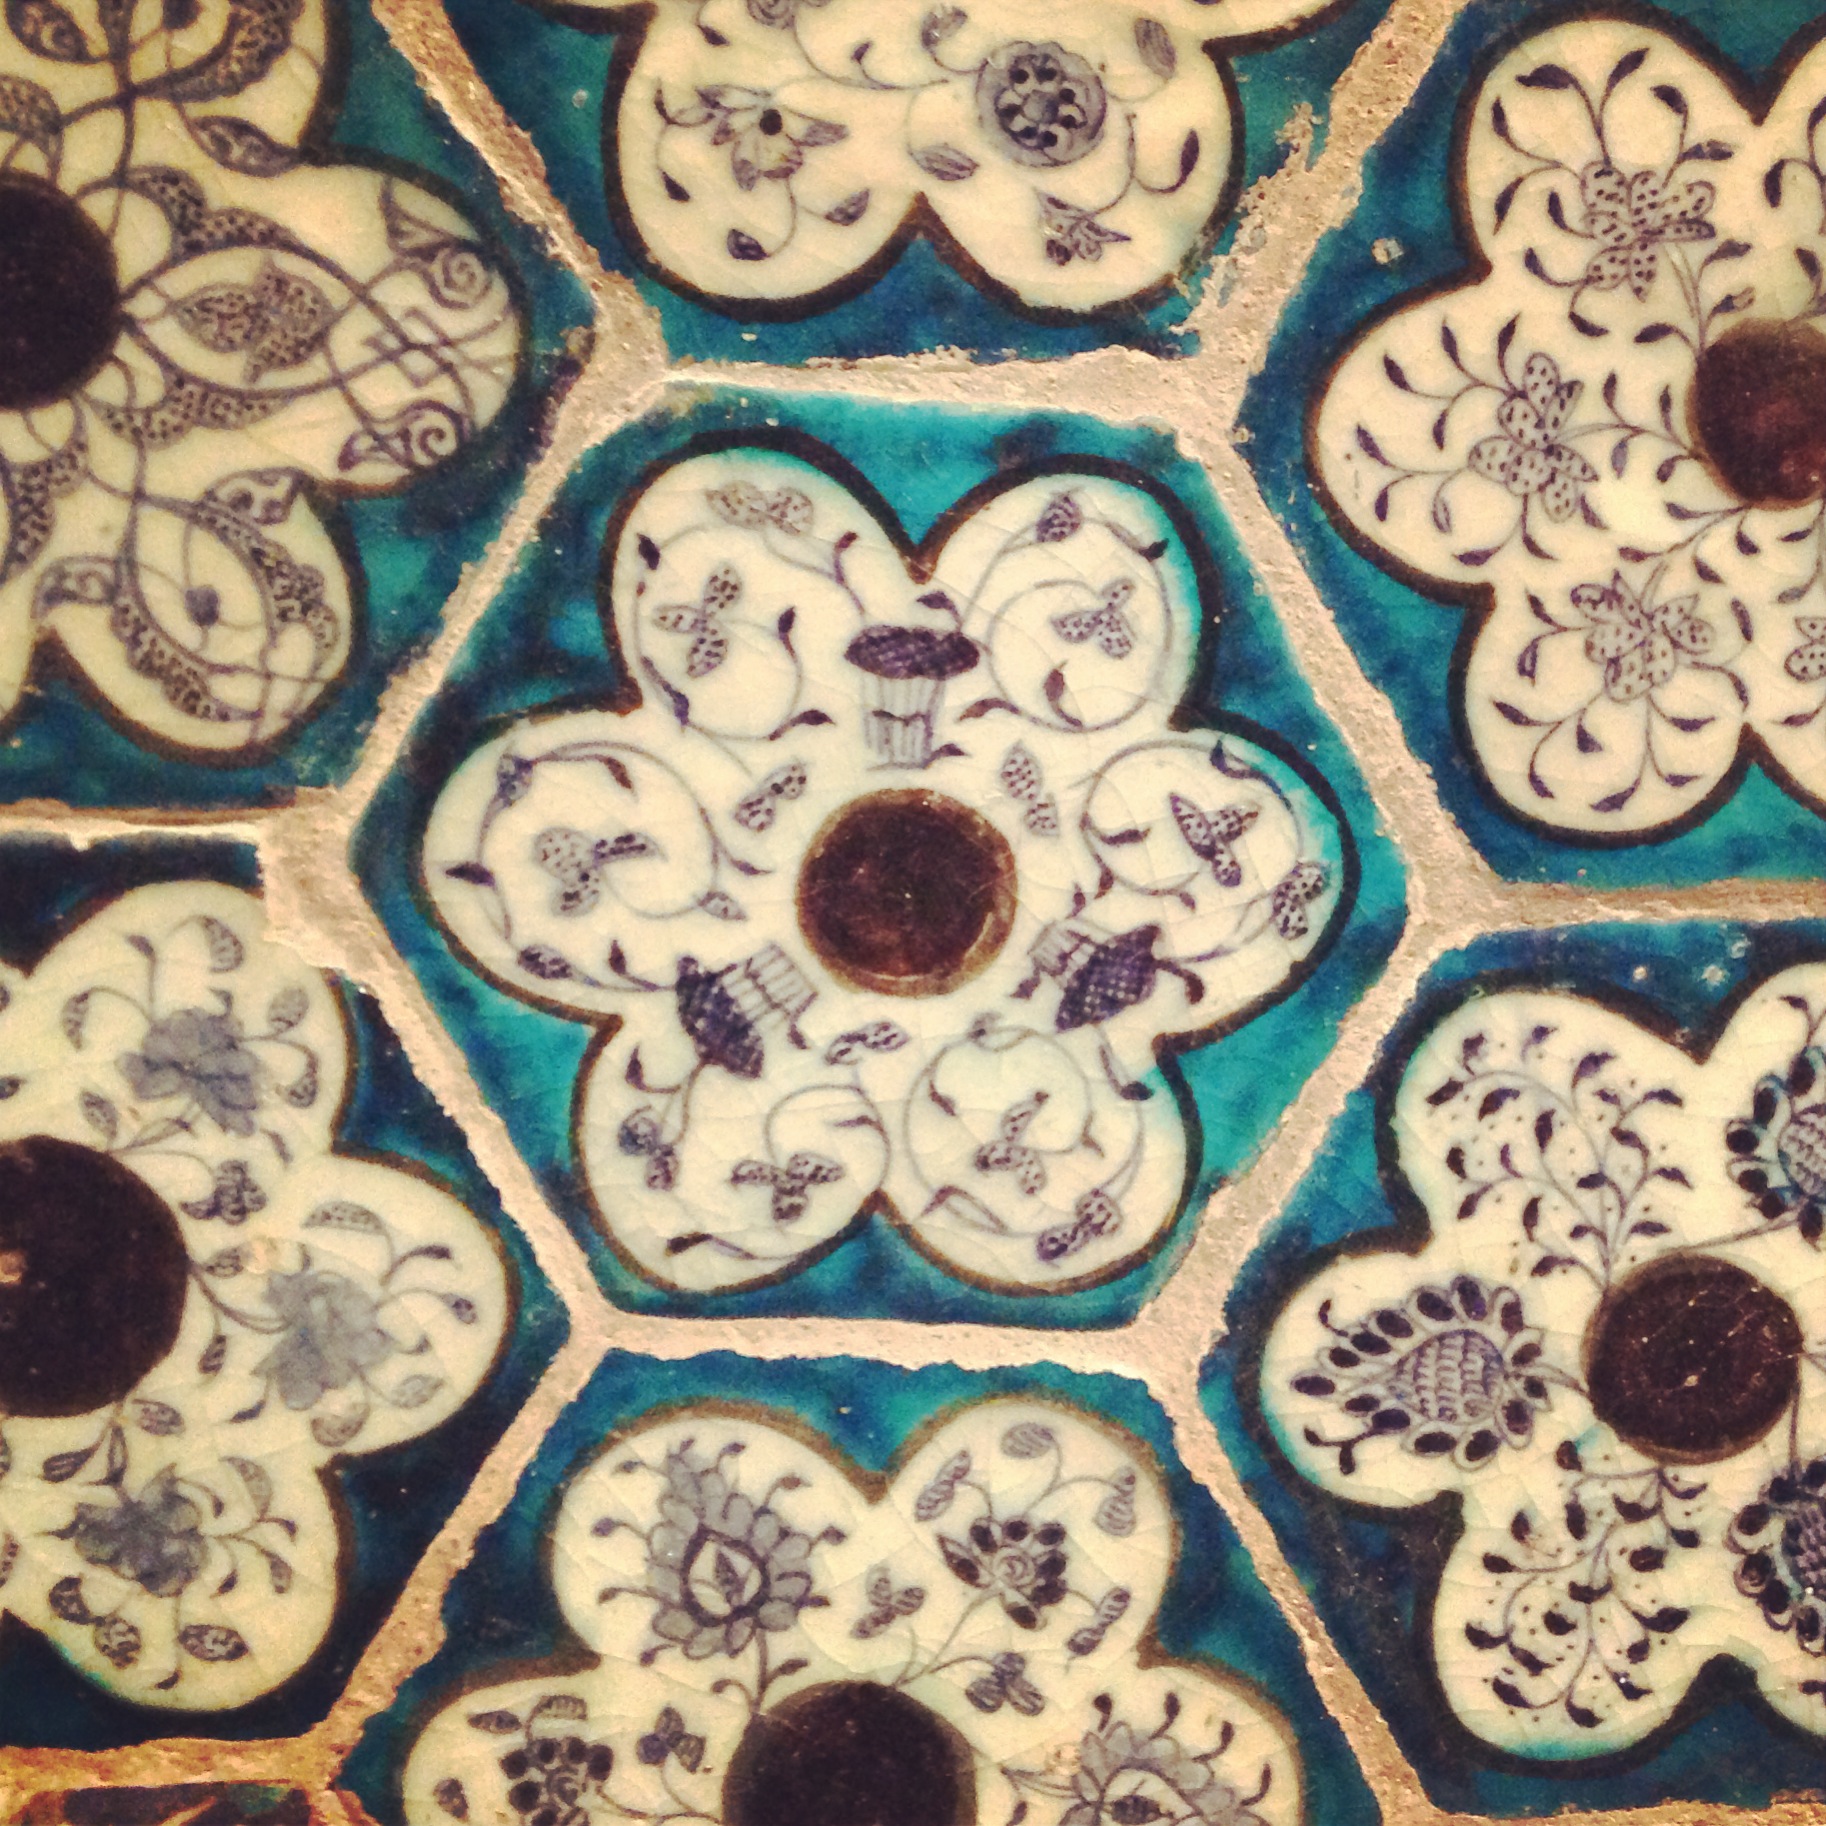 Tiles in Turkish bath hammam